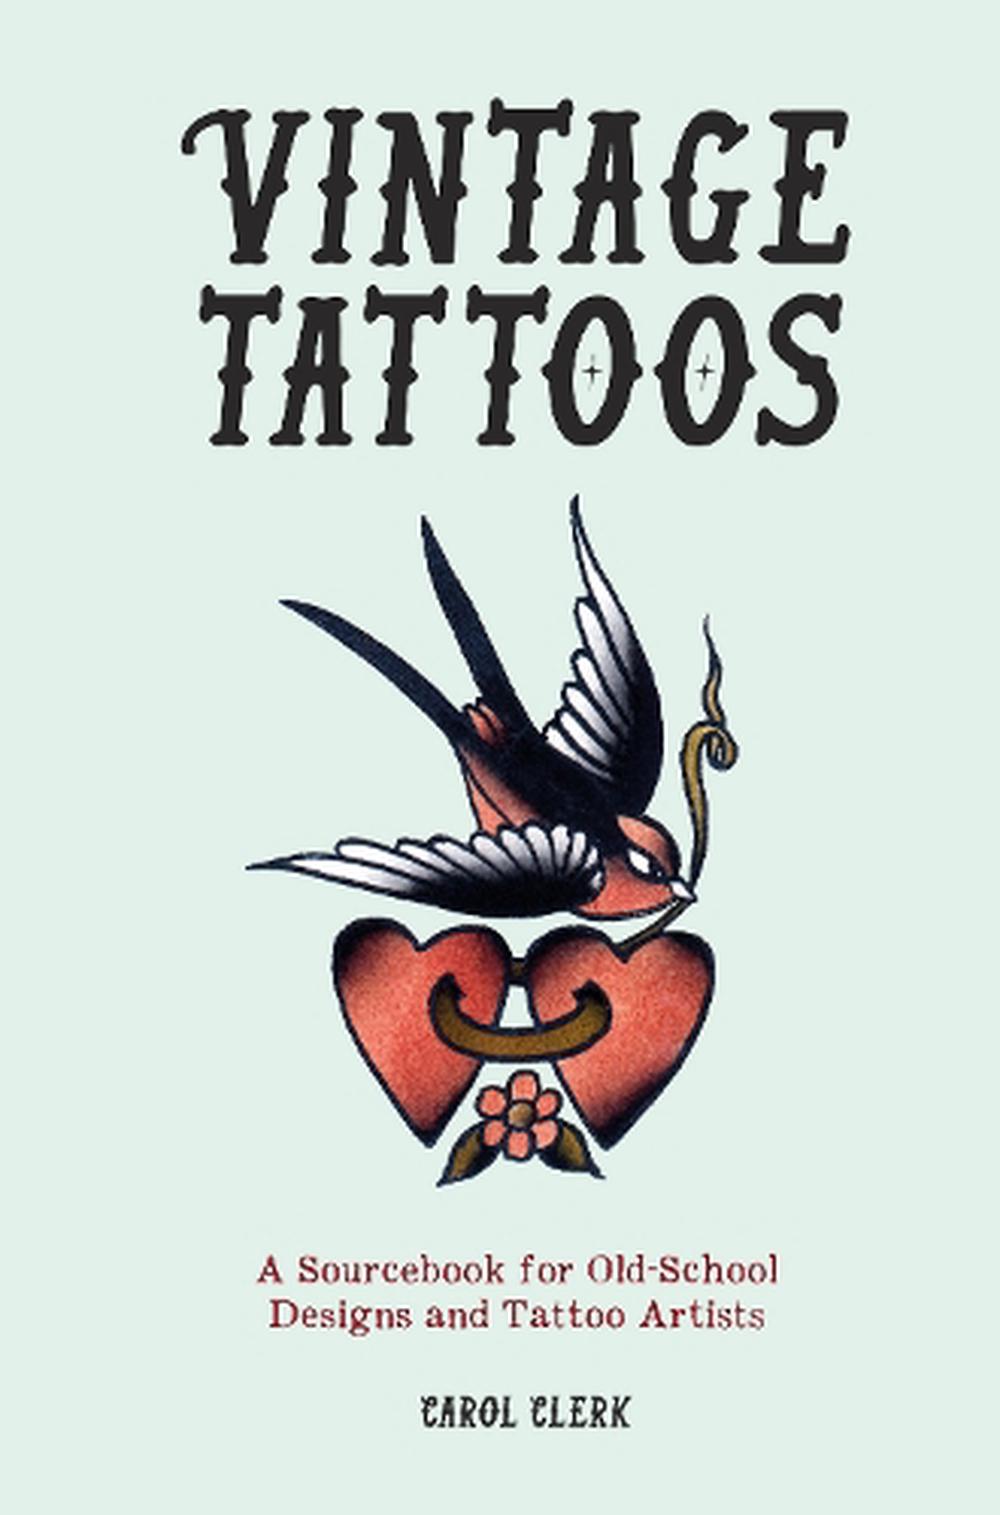 Christian Warlich Tattoo Designs - Tattoo Memorabilia